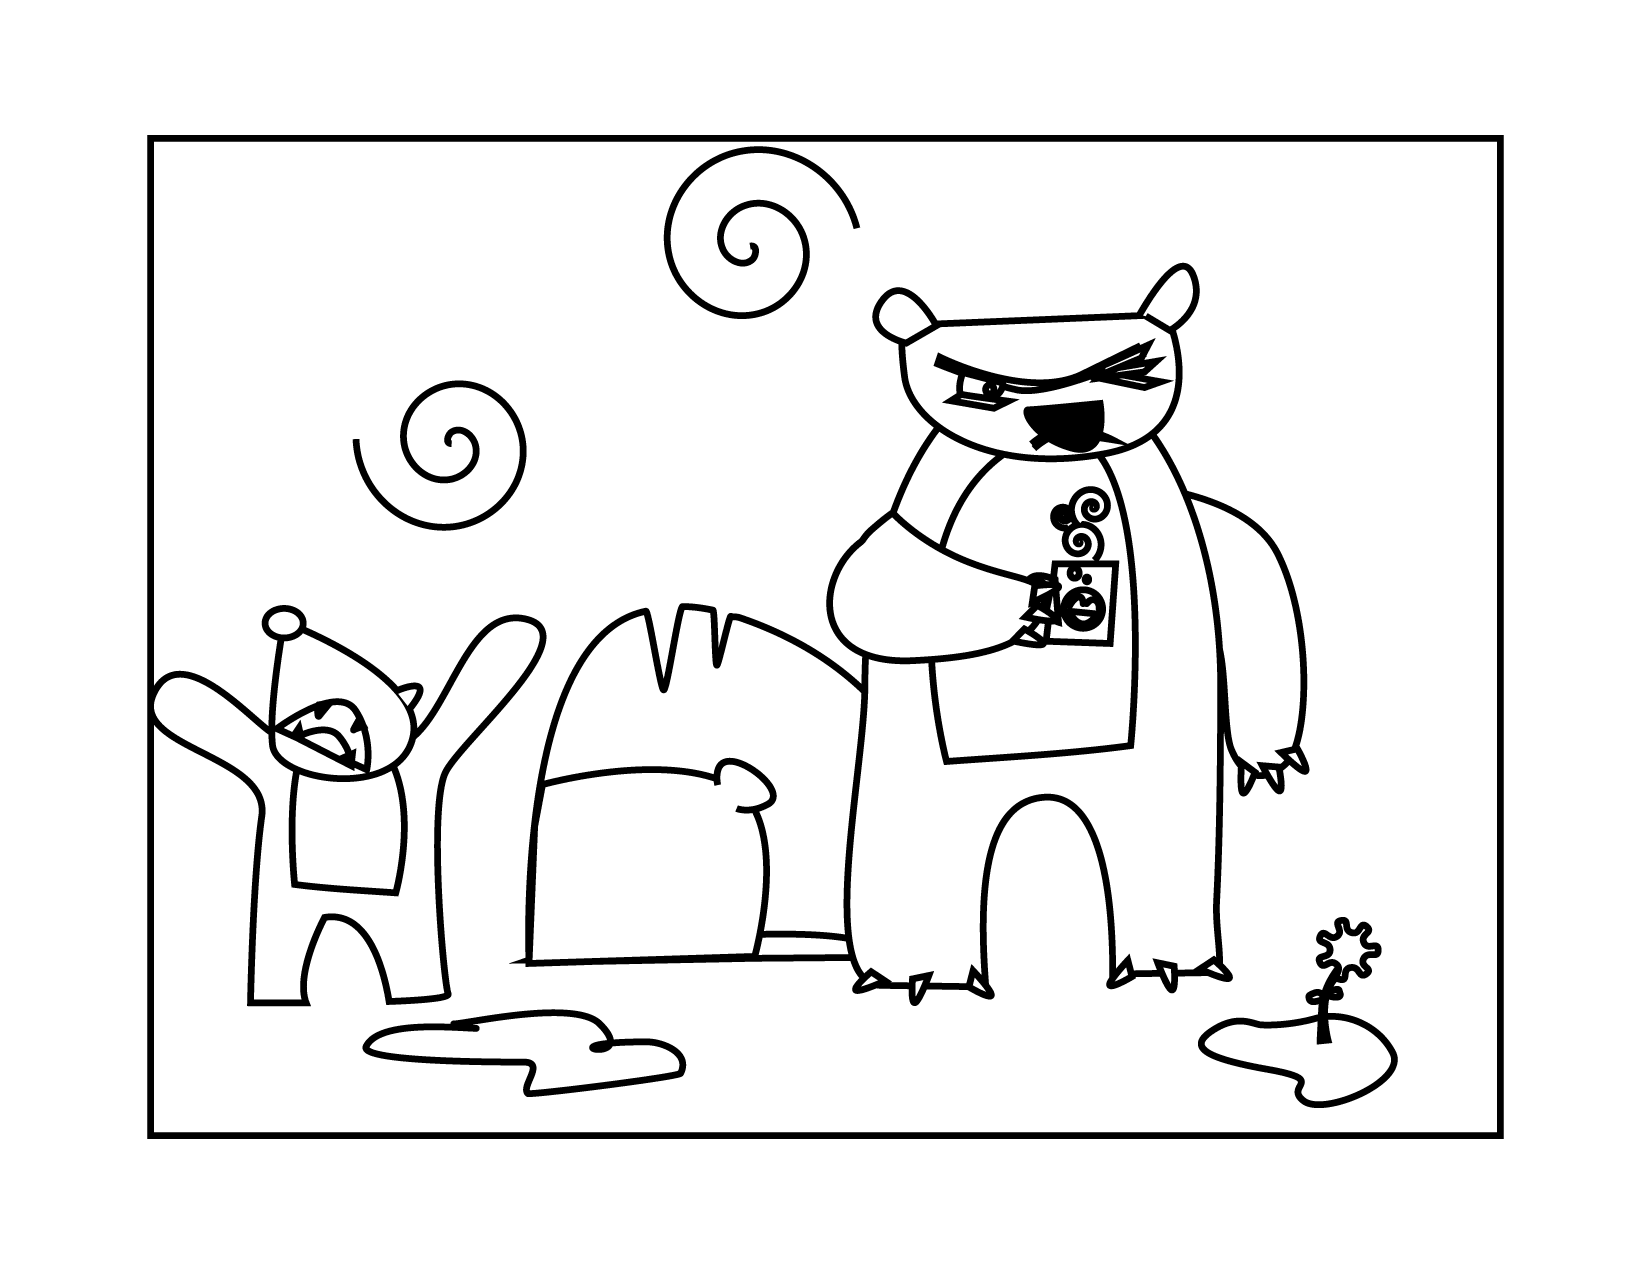 Grumpy Morning Bears Coloring Page